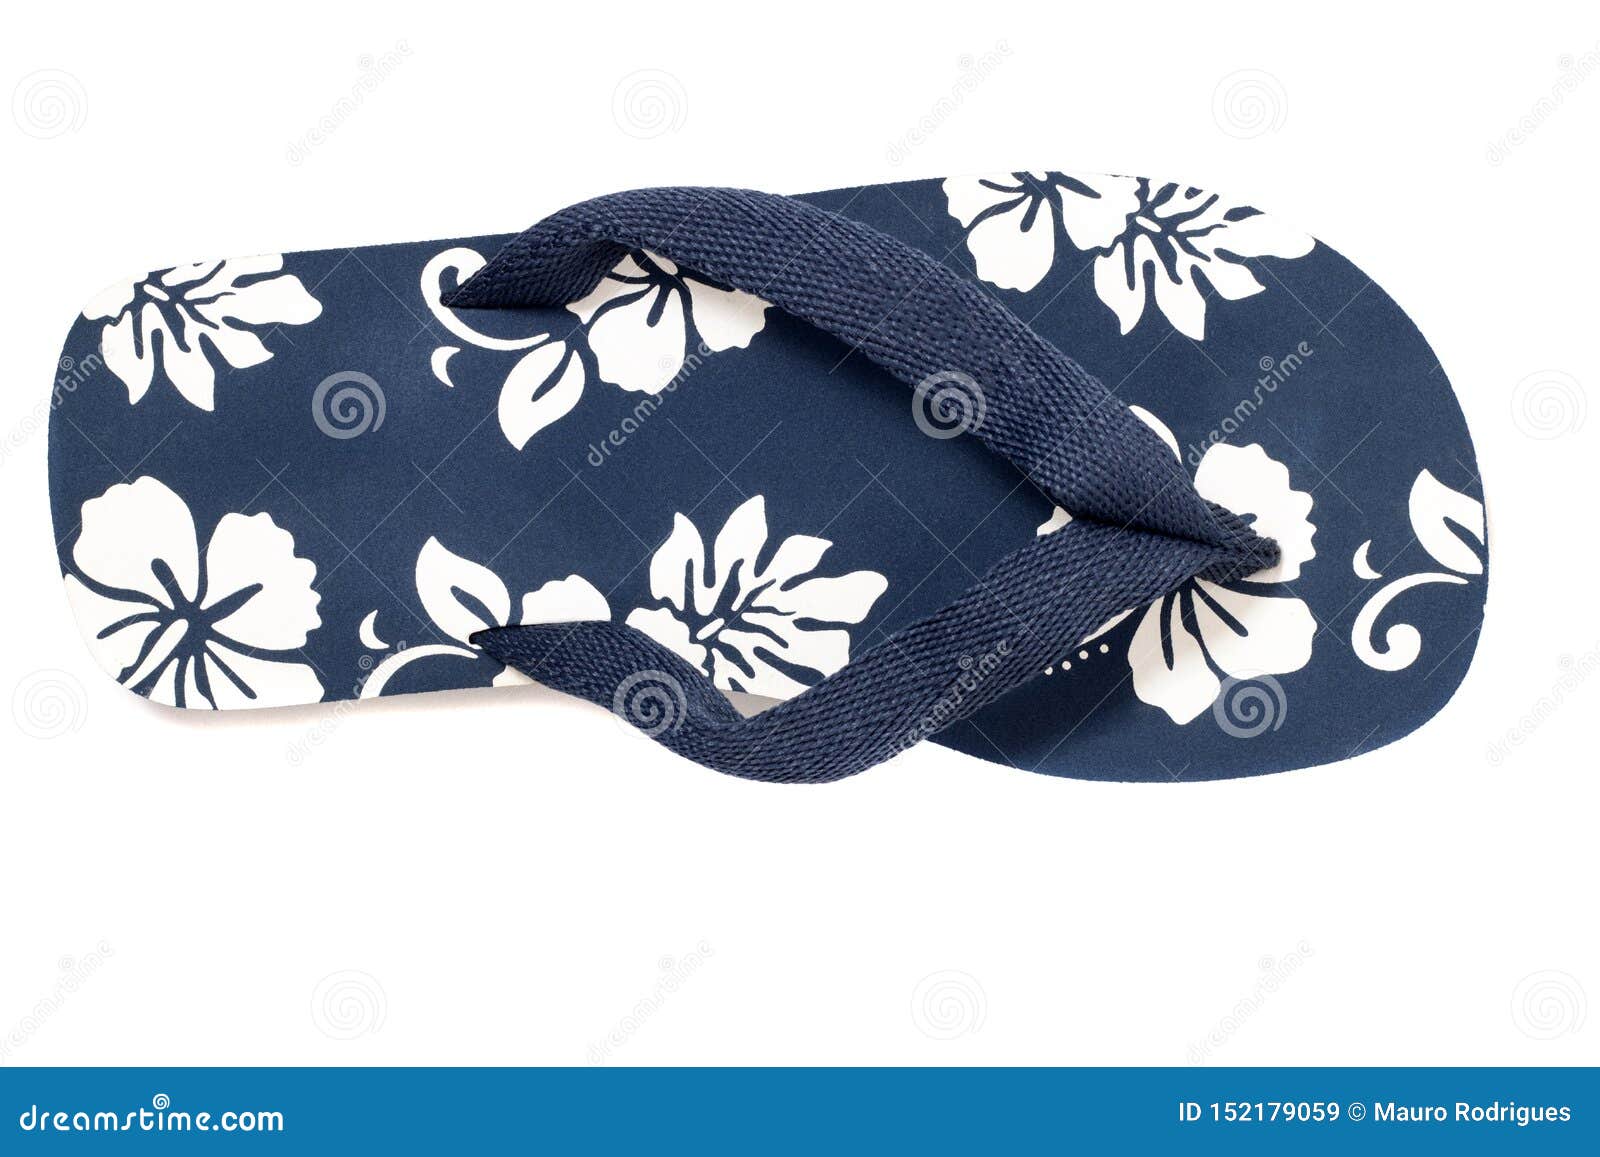 Beach flip flops stock image. Image of ocean, background - 152179059